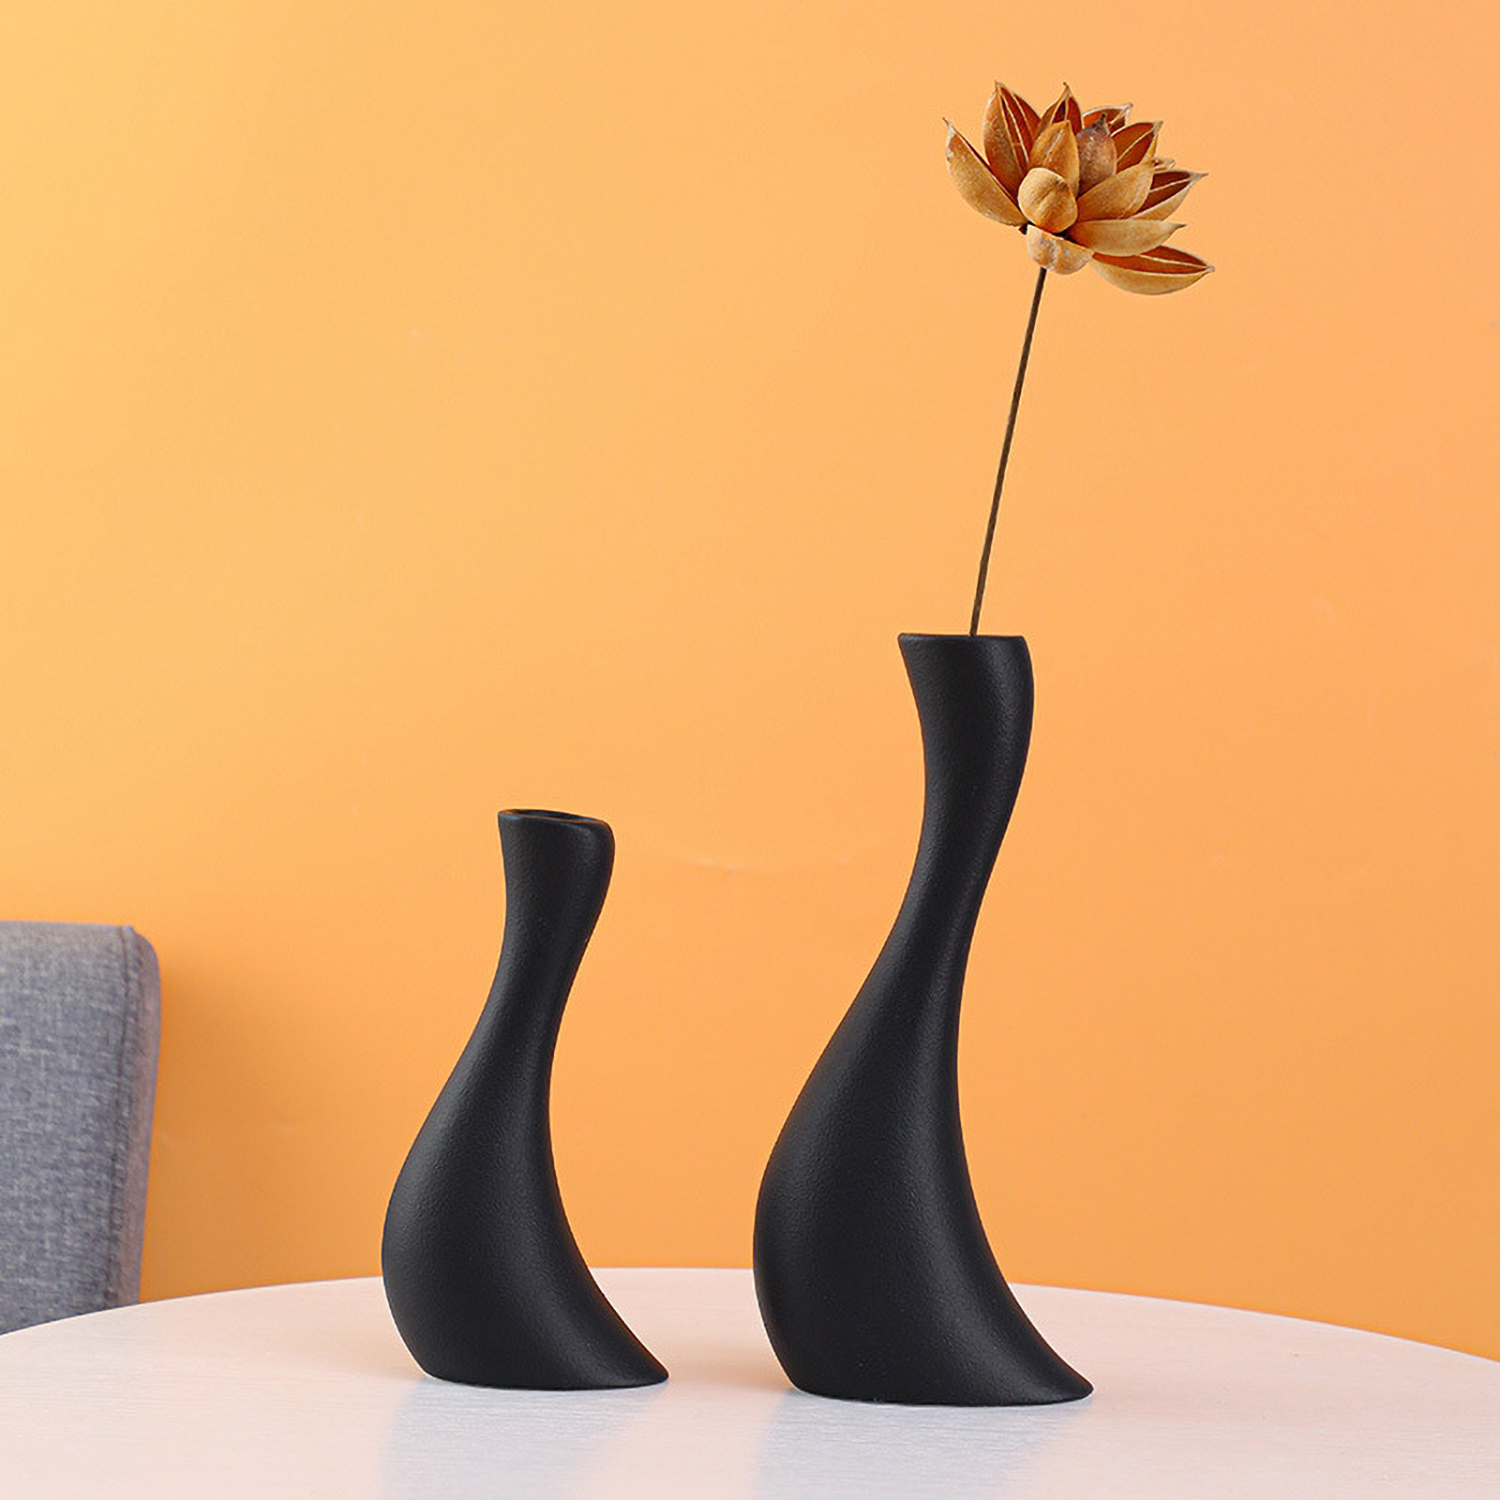 Matorino -Ceramic Vase - Flower Vase Minimalism Style for Modern